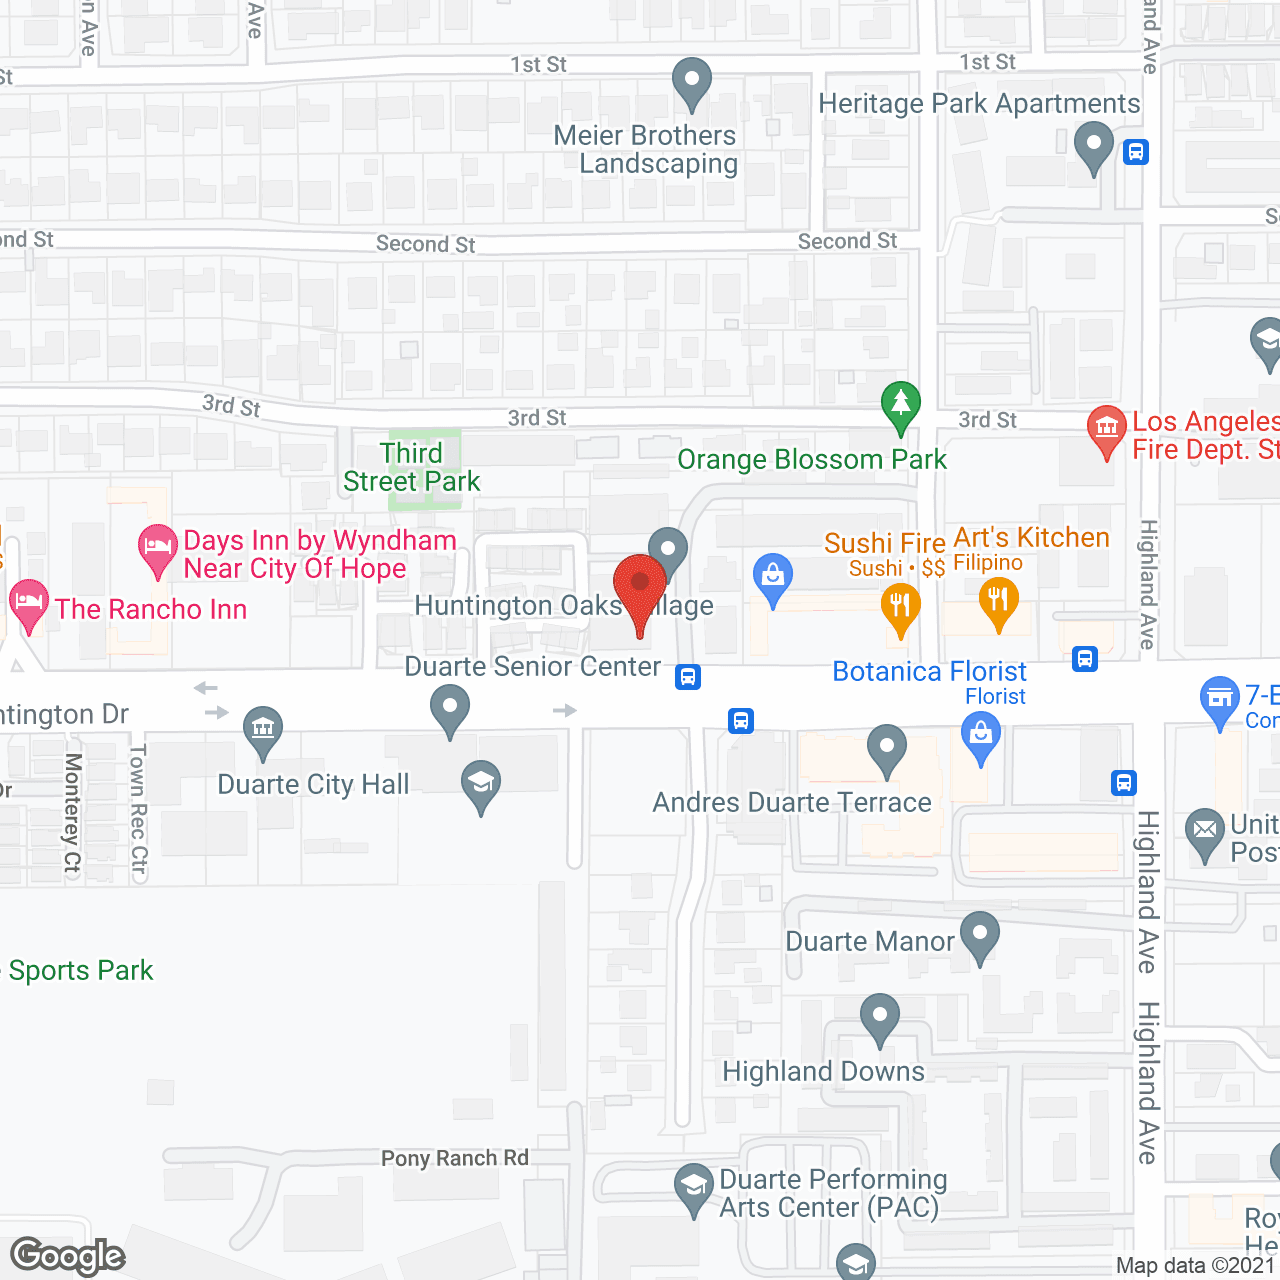 Huntington Oaks Village in google map